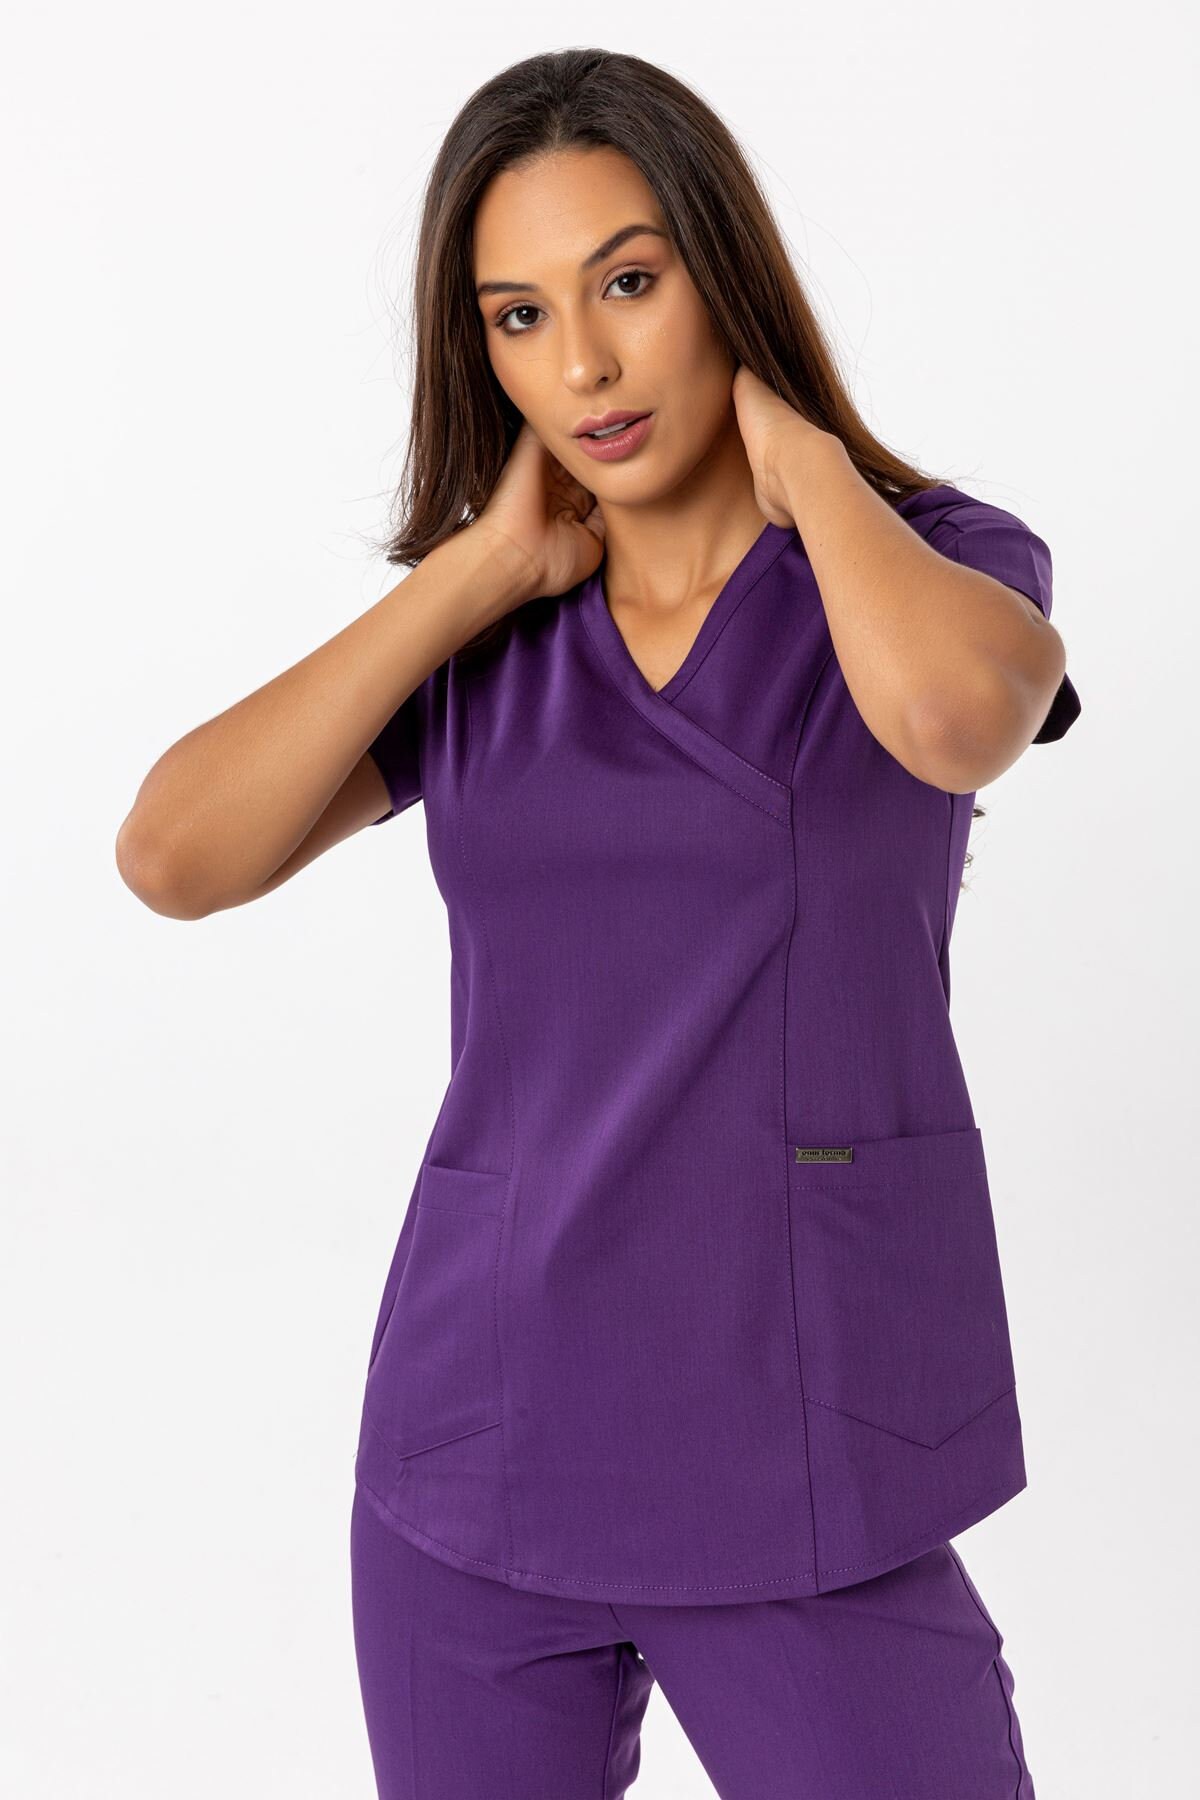 Introducing IFE Unisex Scrub Jumpsuit (purple) with 10 pockets